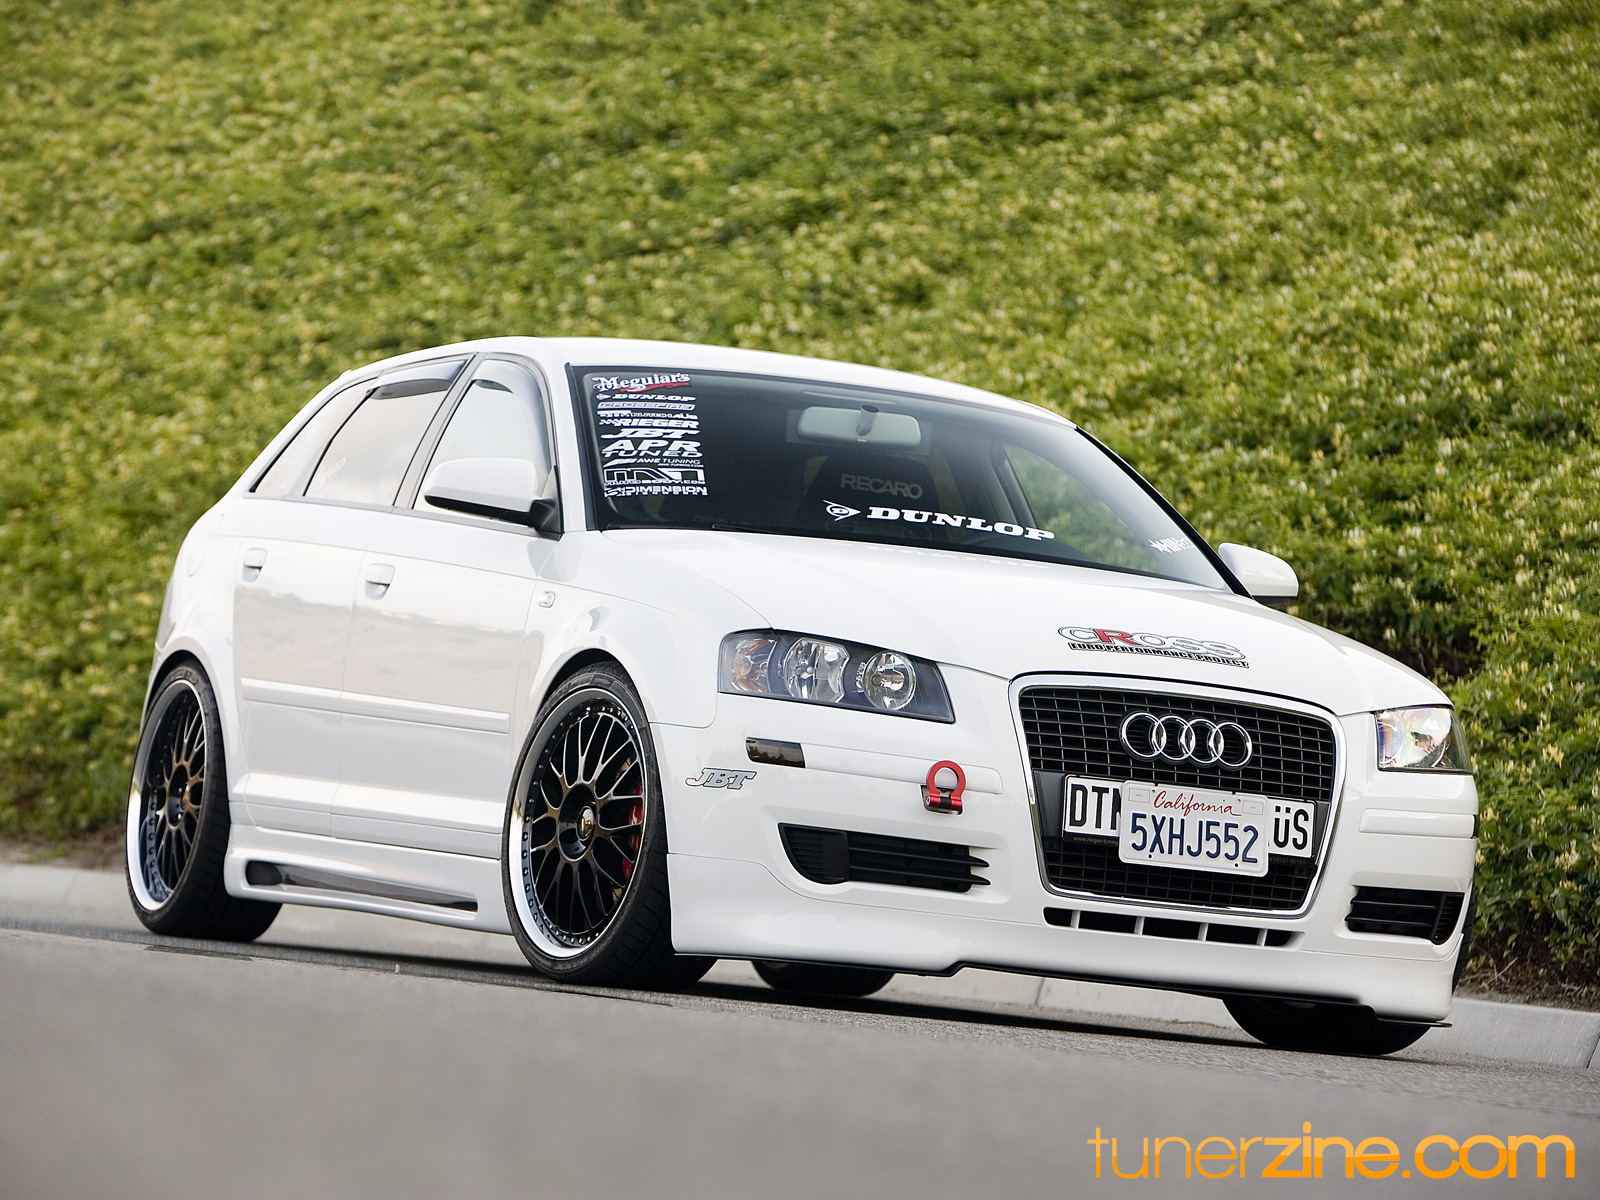 Download full size Audi wallpaper / Cars / 1600x1200